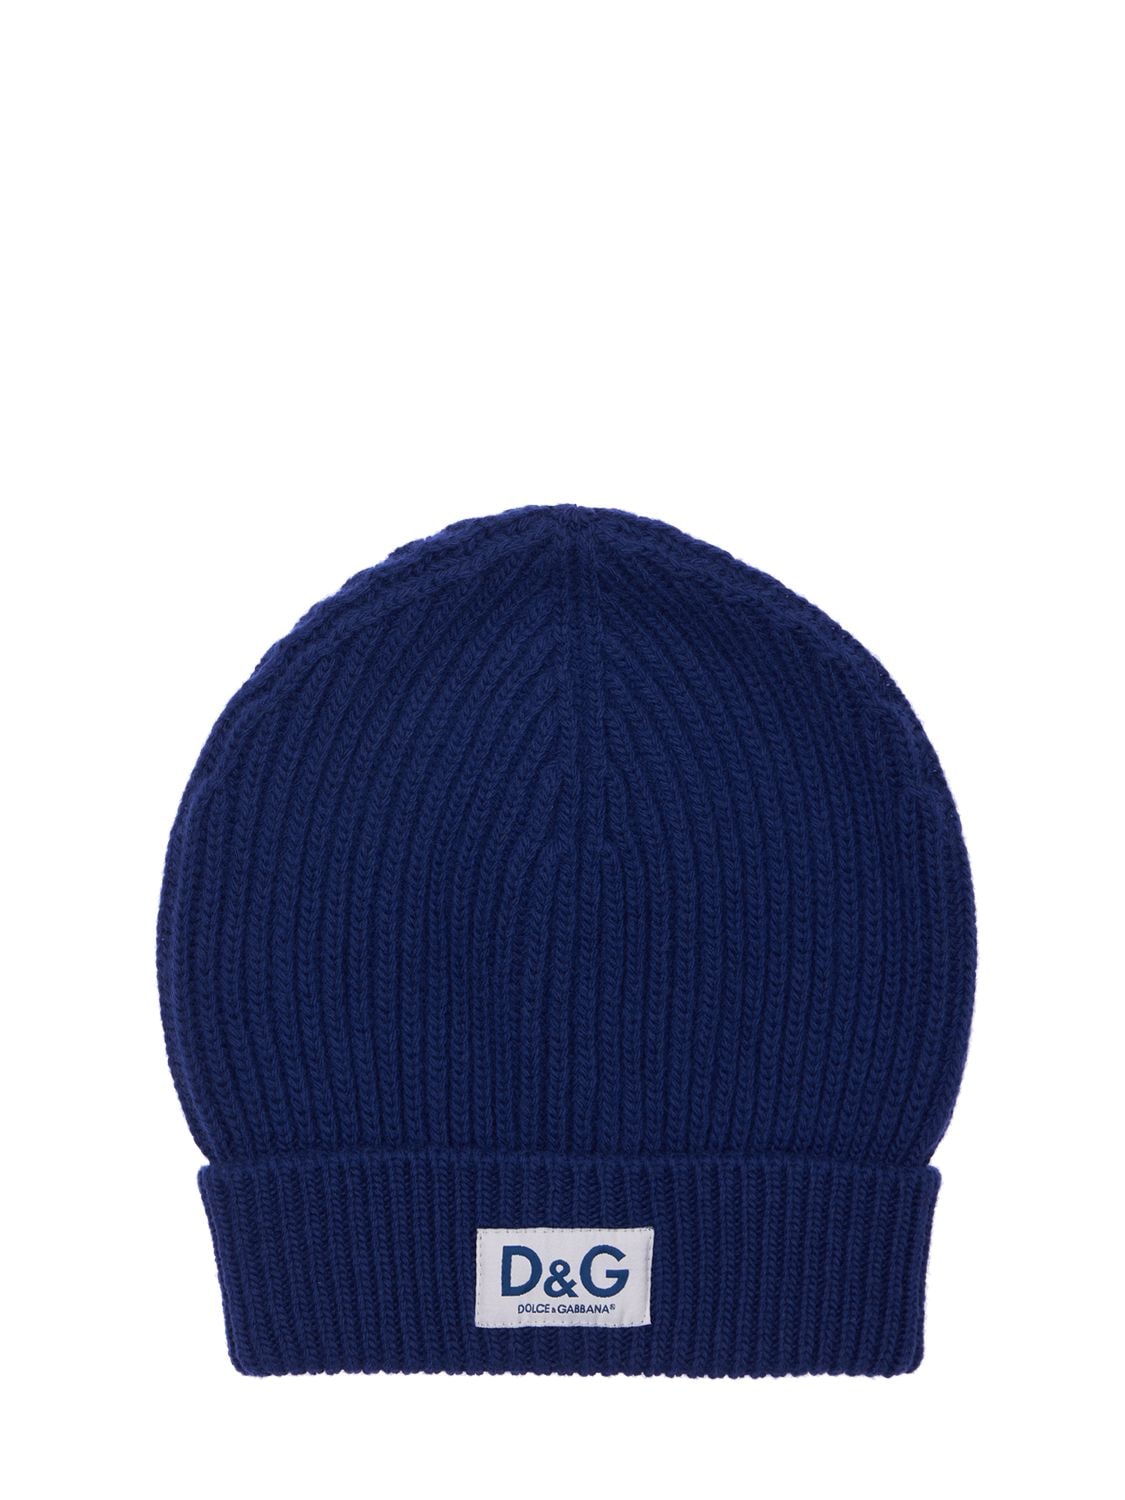 DOLCE & GABBANA D&G贴片羊毛针织便帽,74IG2G018-QJAZMTA1